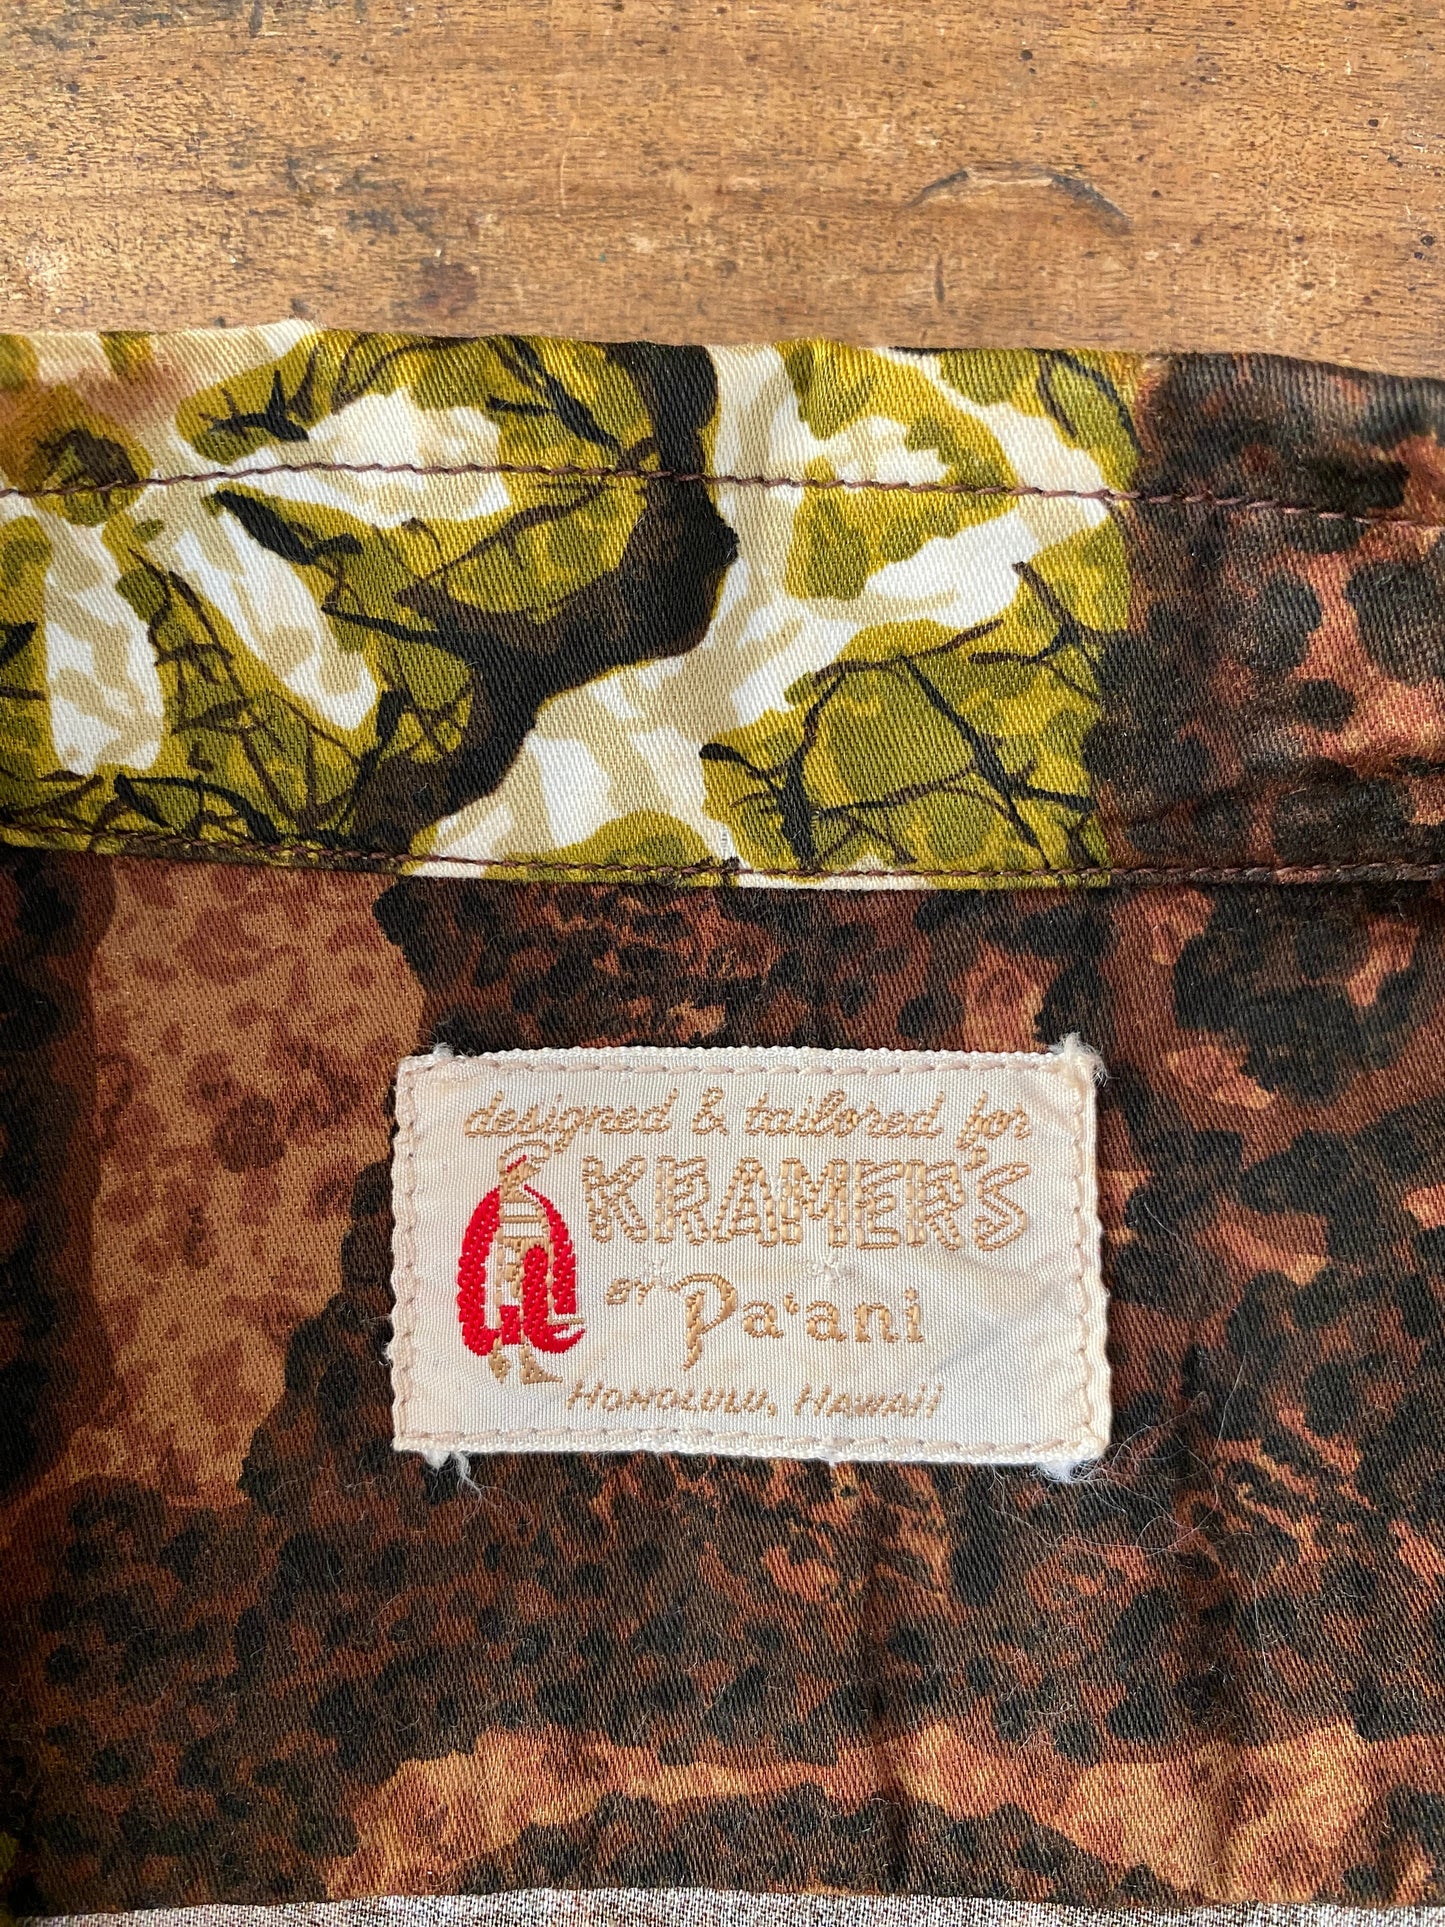 Large Vintage 60s Hawaiian Satin Cotton Shirt: Classic Retro Apparel Made in Hawaii